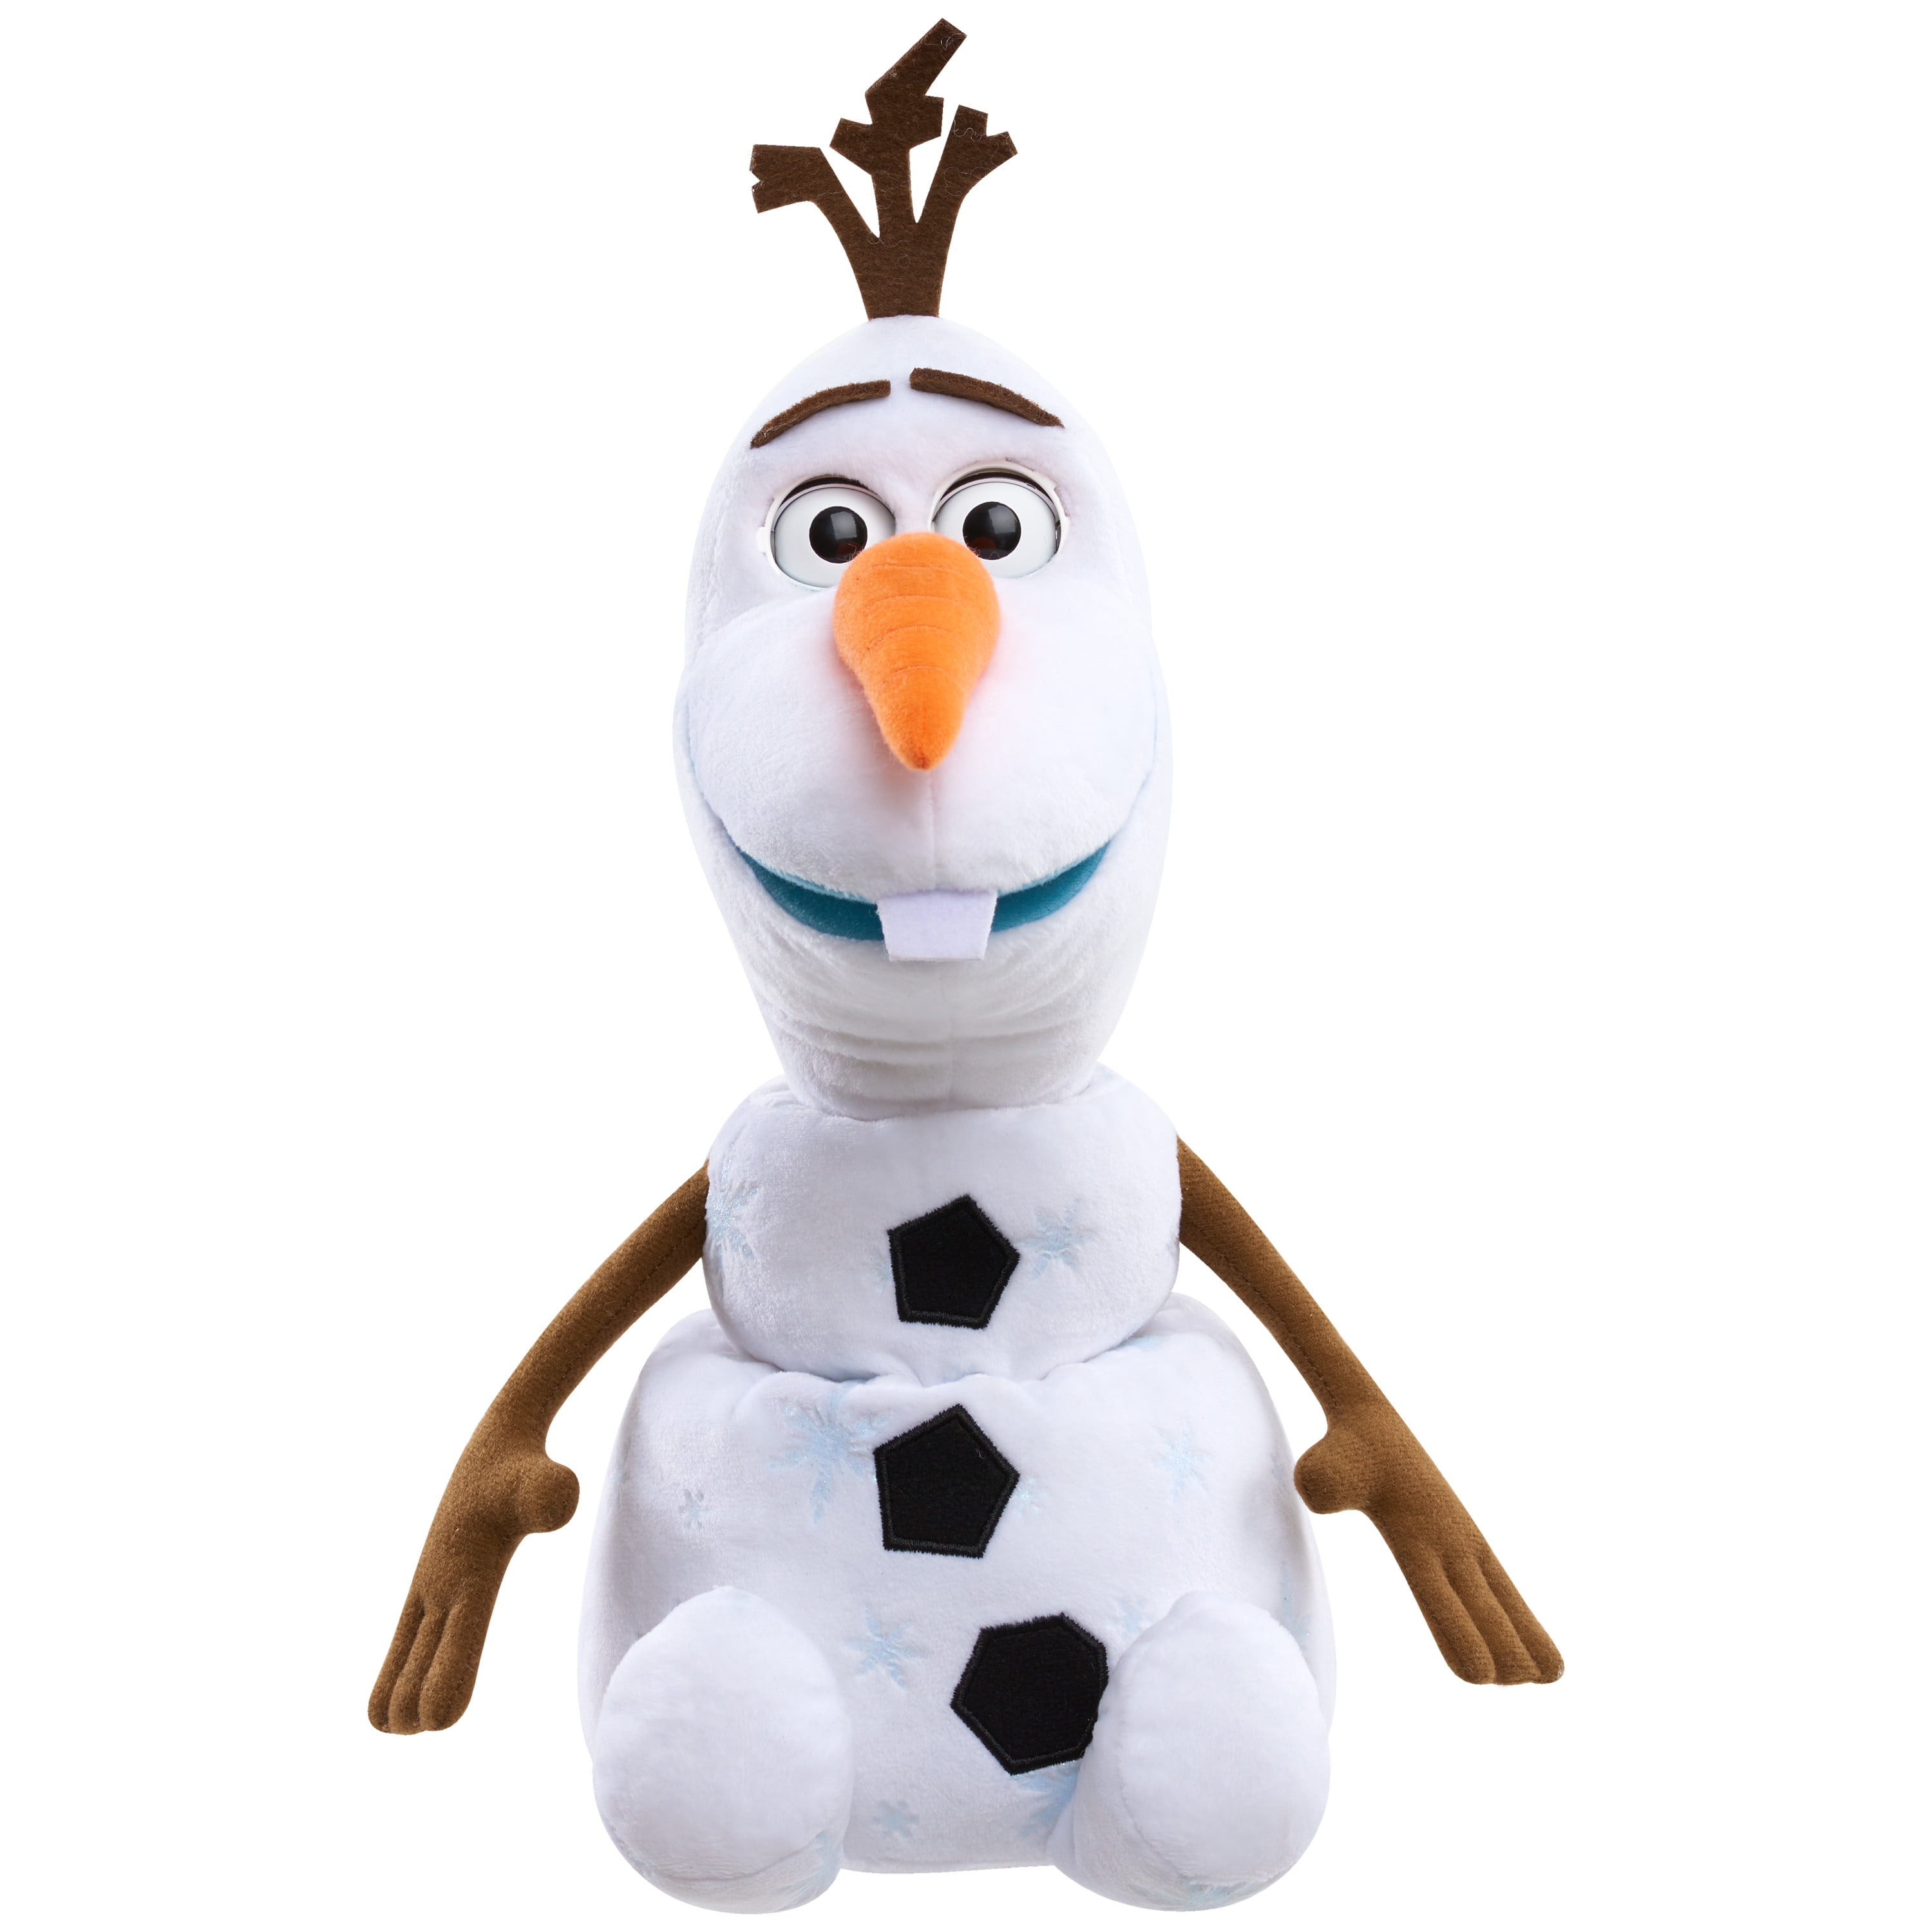 1x Official Olaf Snowman Stuffed Plush Doll Ty Beanie Babies Disney Movie Frozen for sale online 